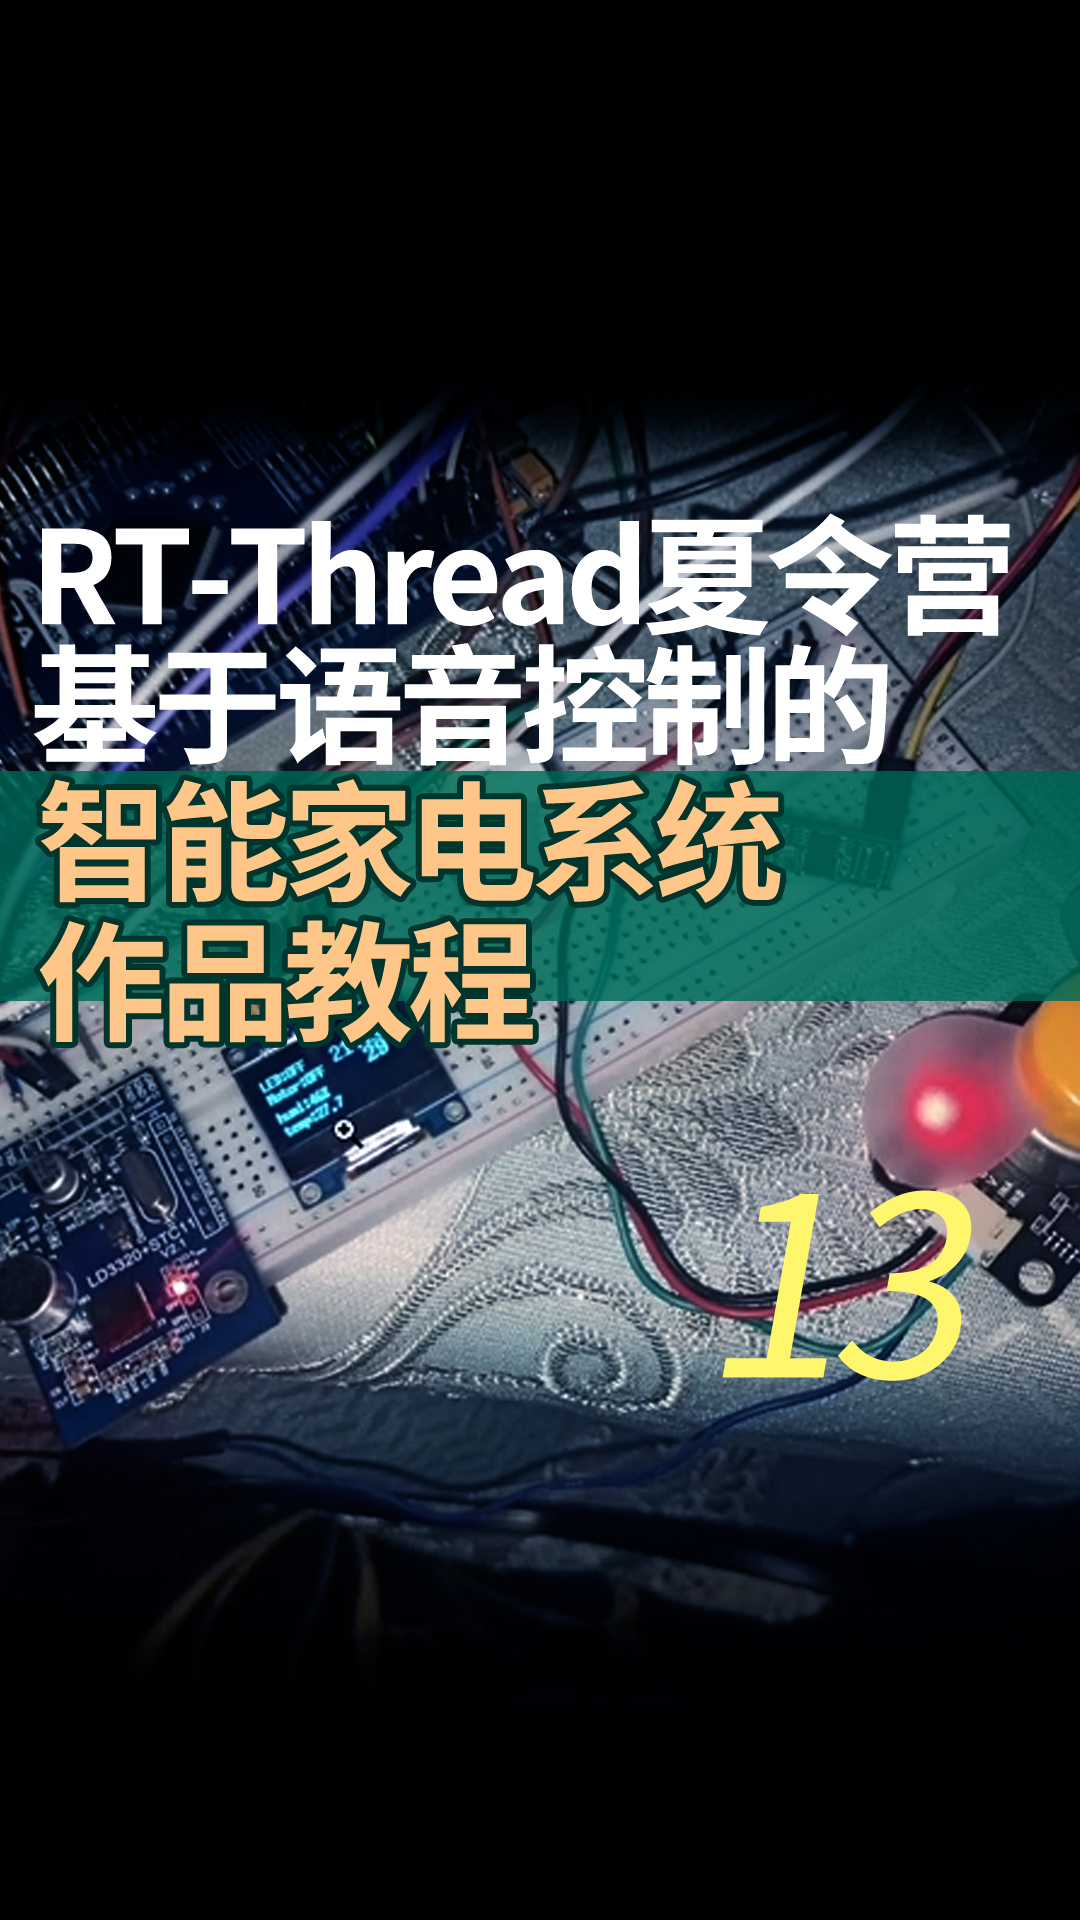 RT-Thread夏令营基于语音控制的智能家电系统作品教程13 sensor设备的使用